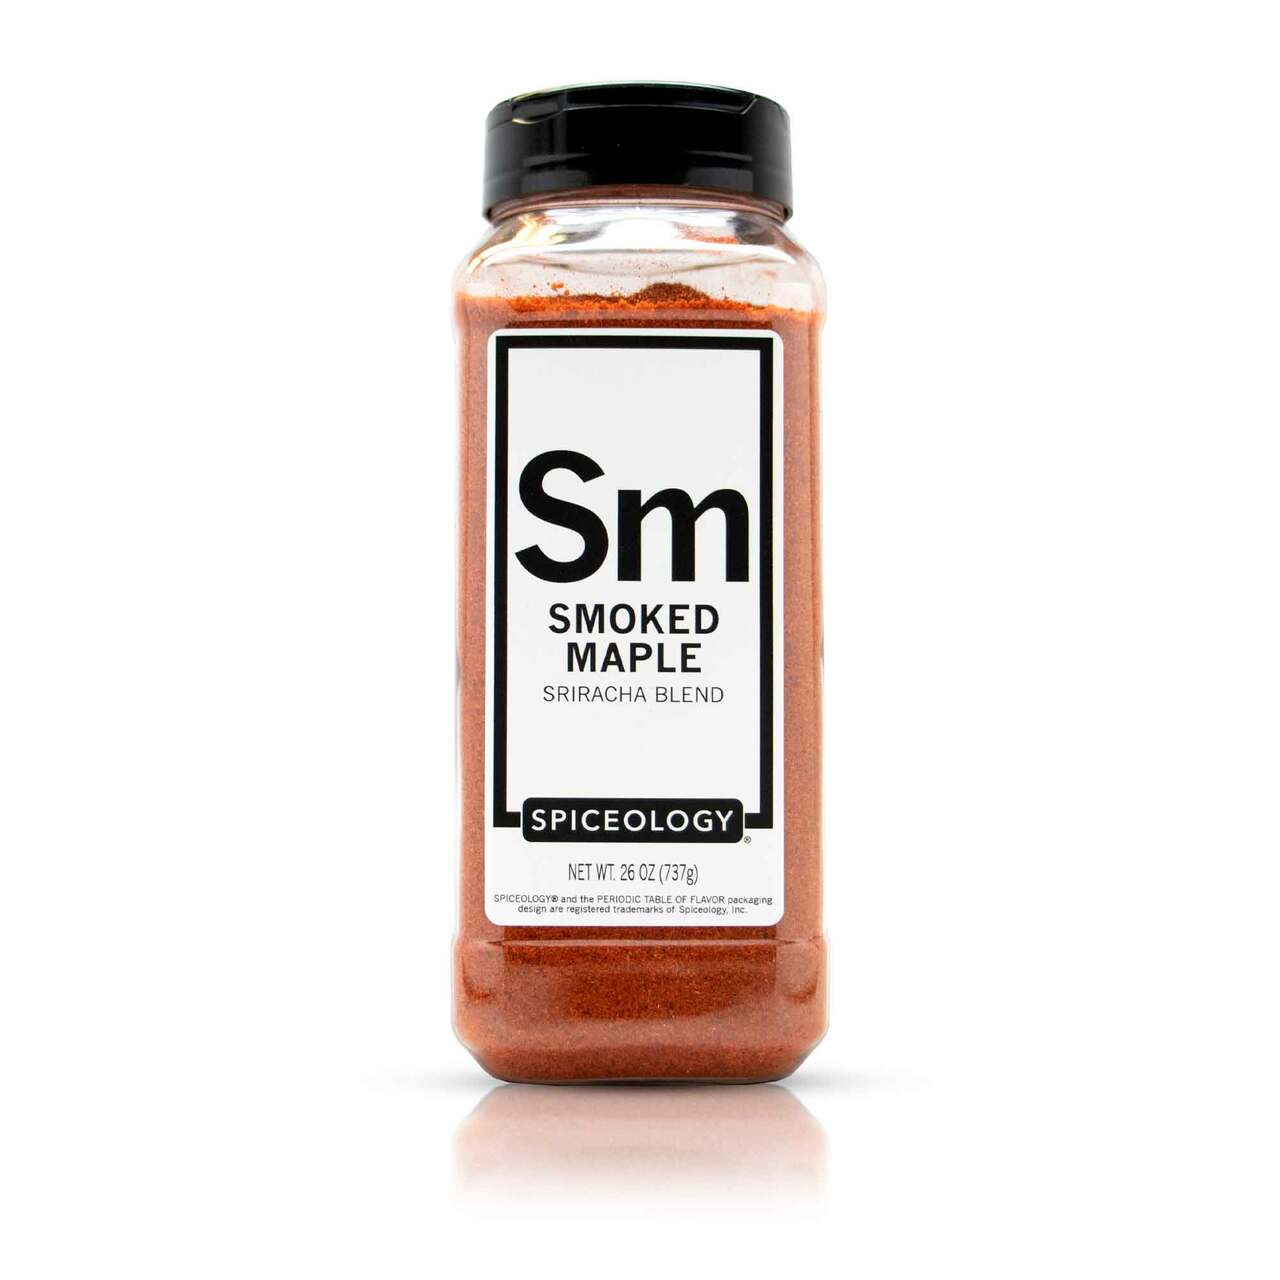 Spiceology Smoked Maple Sriracha Blend